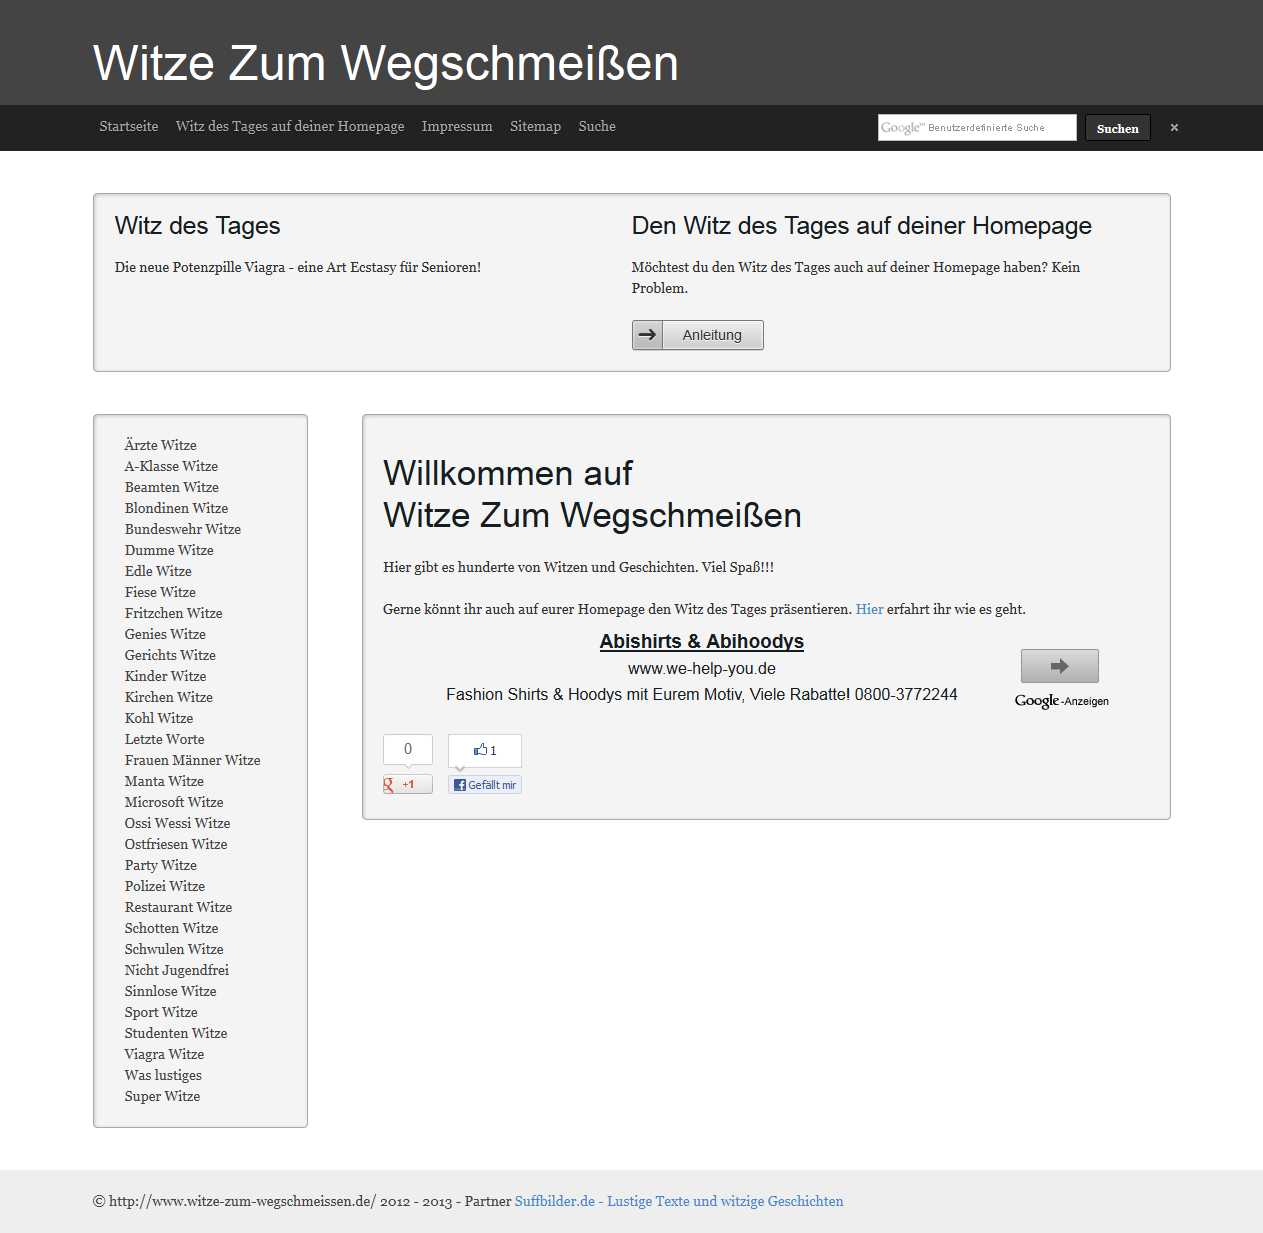 www.witze-zum-wegschmeissen.de